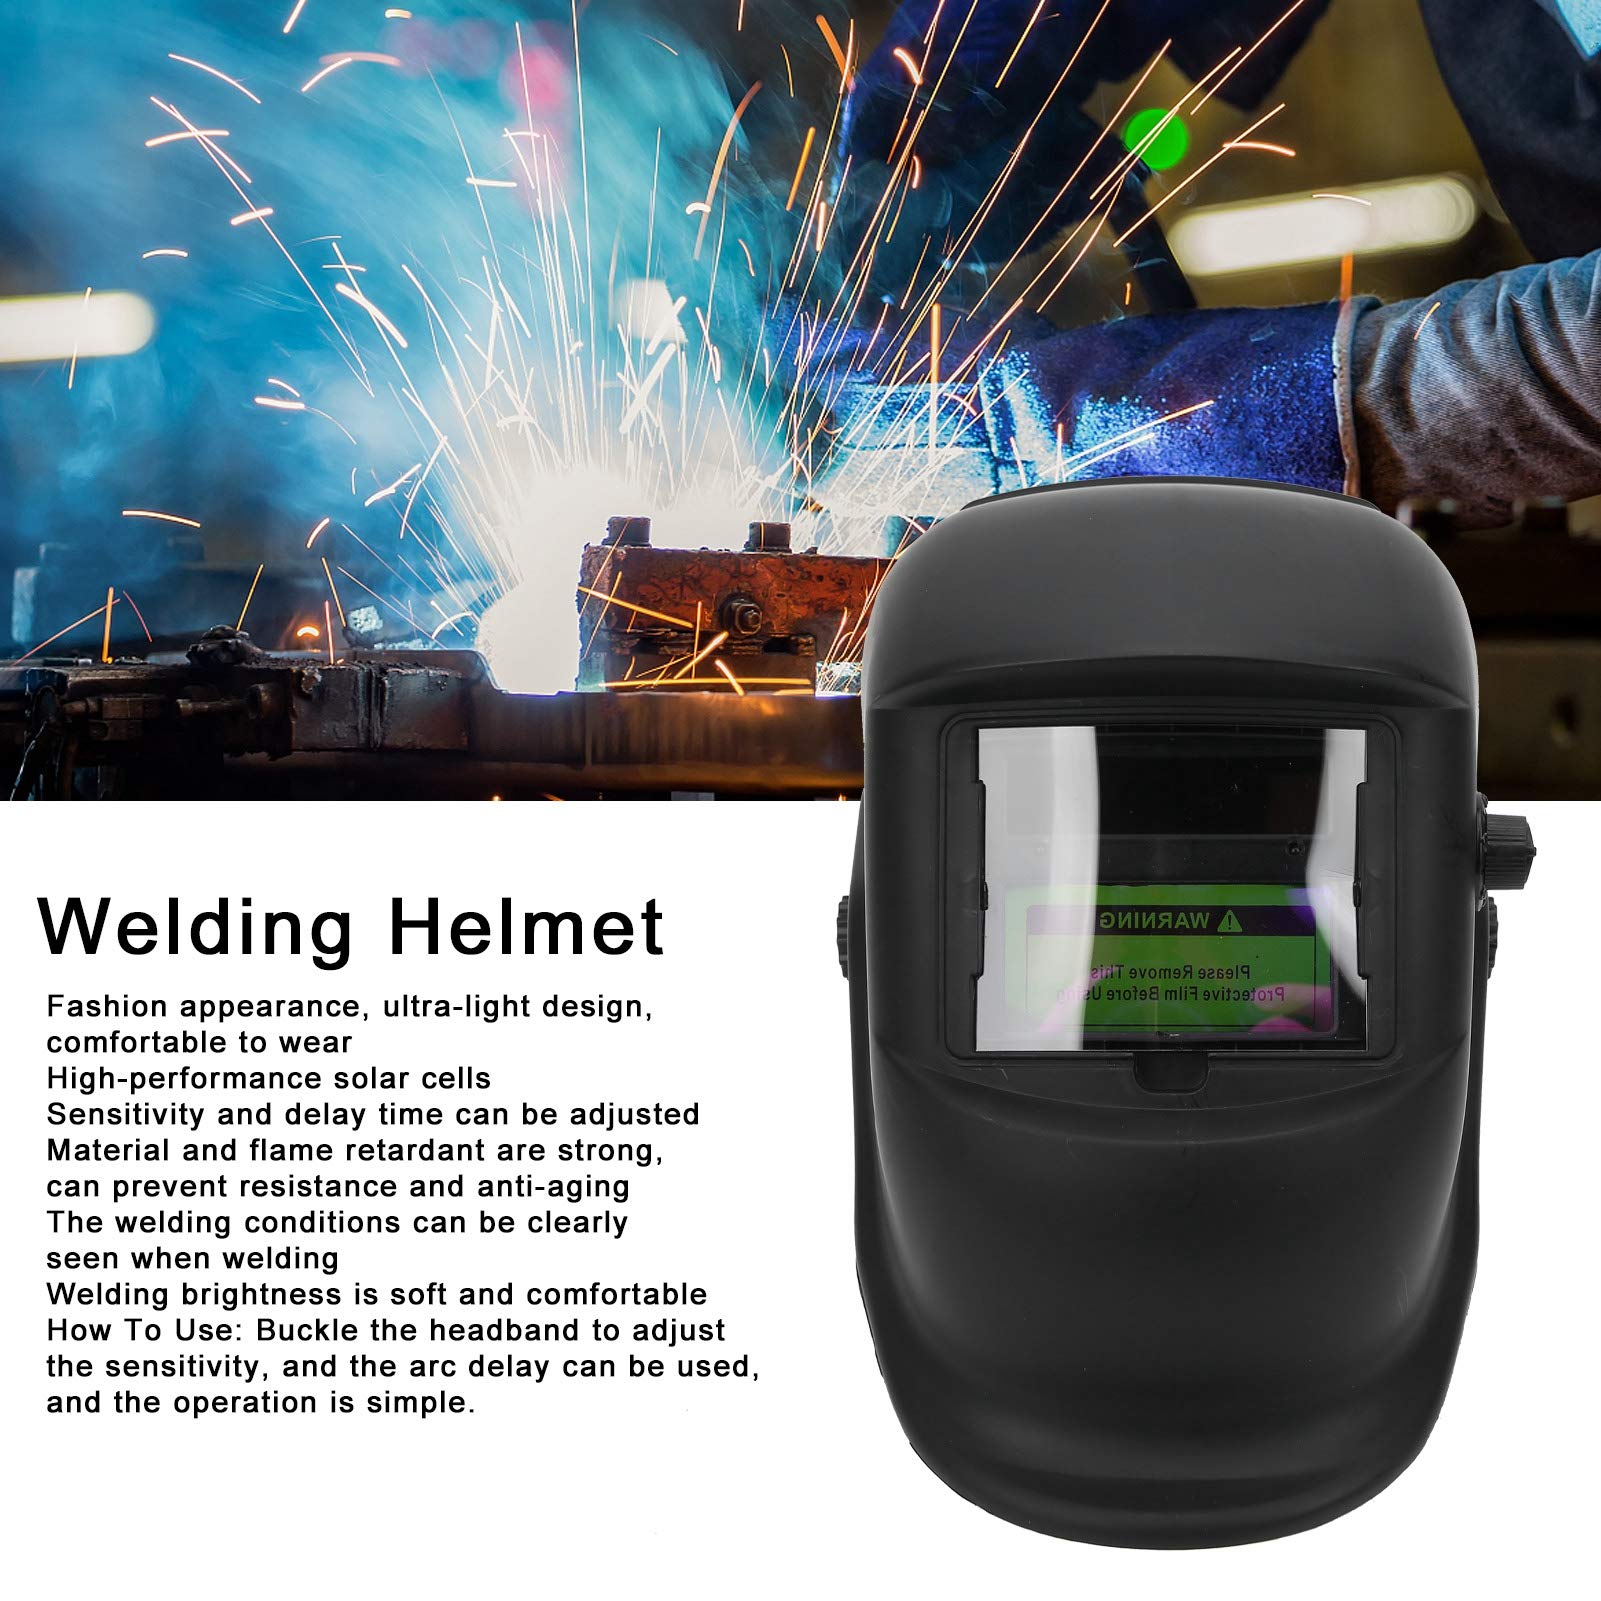 Welding Helmet, Welder Face Protective Helmet Convenient High-Performance Solar Cells Strong Flame Retardancy Adjusted for Worker for Welding